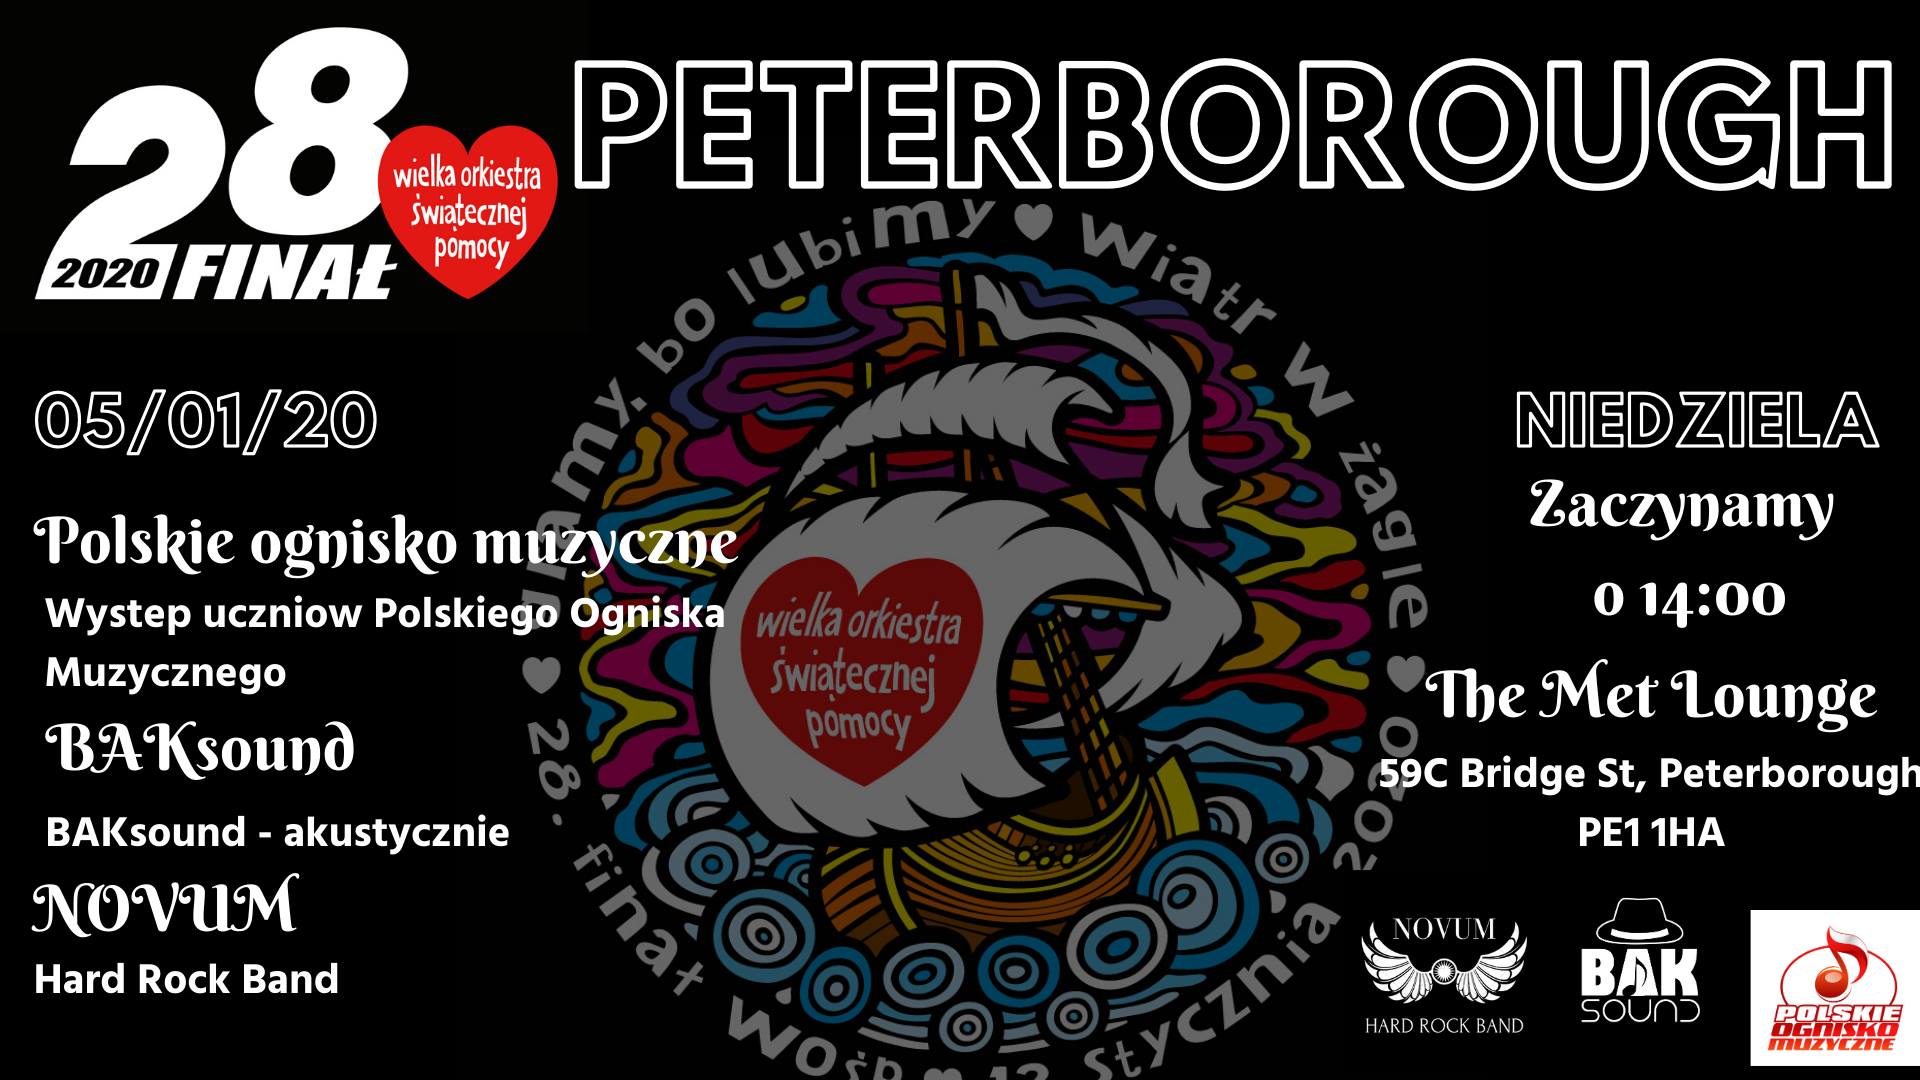 wosp 2020 peterborough 1 plakat